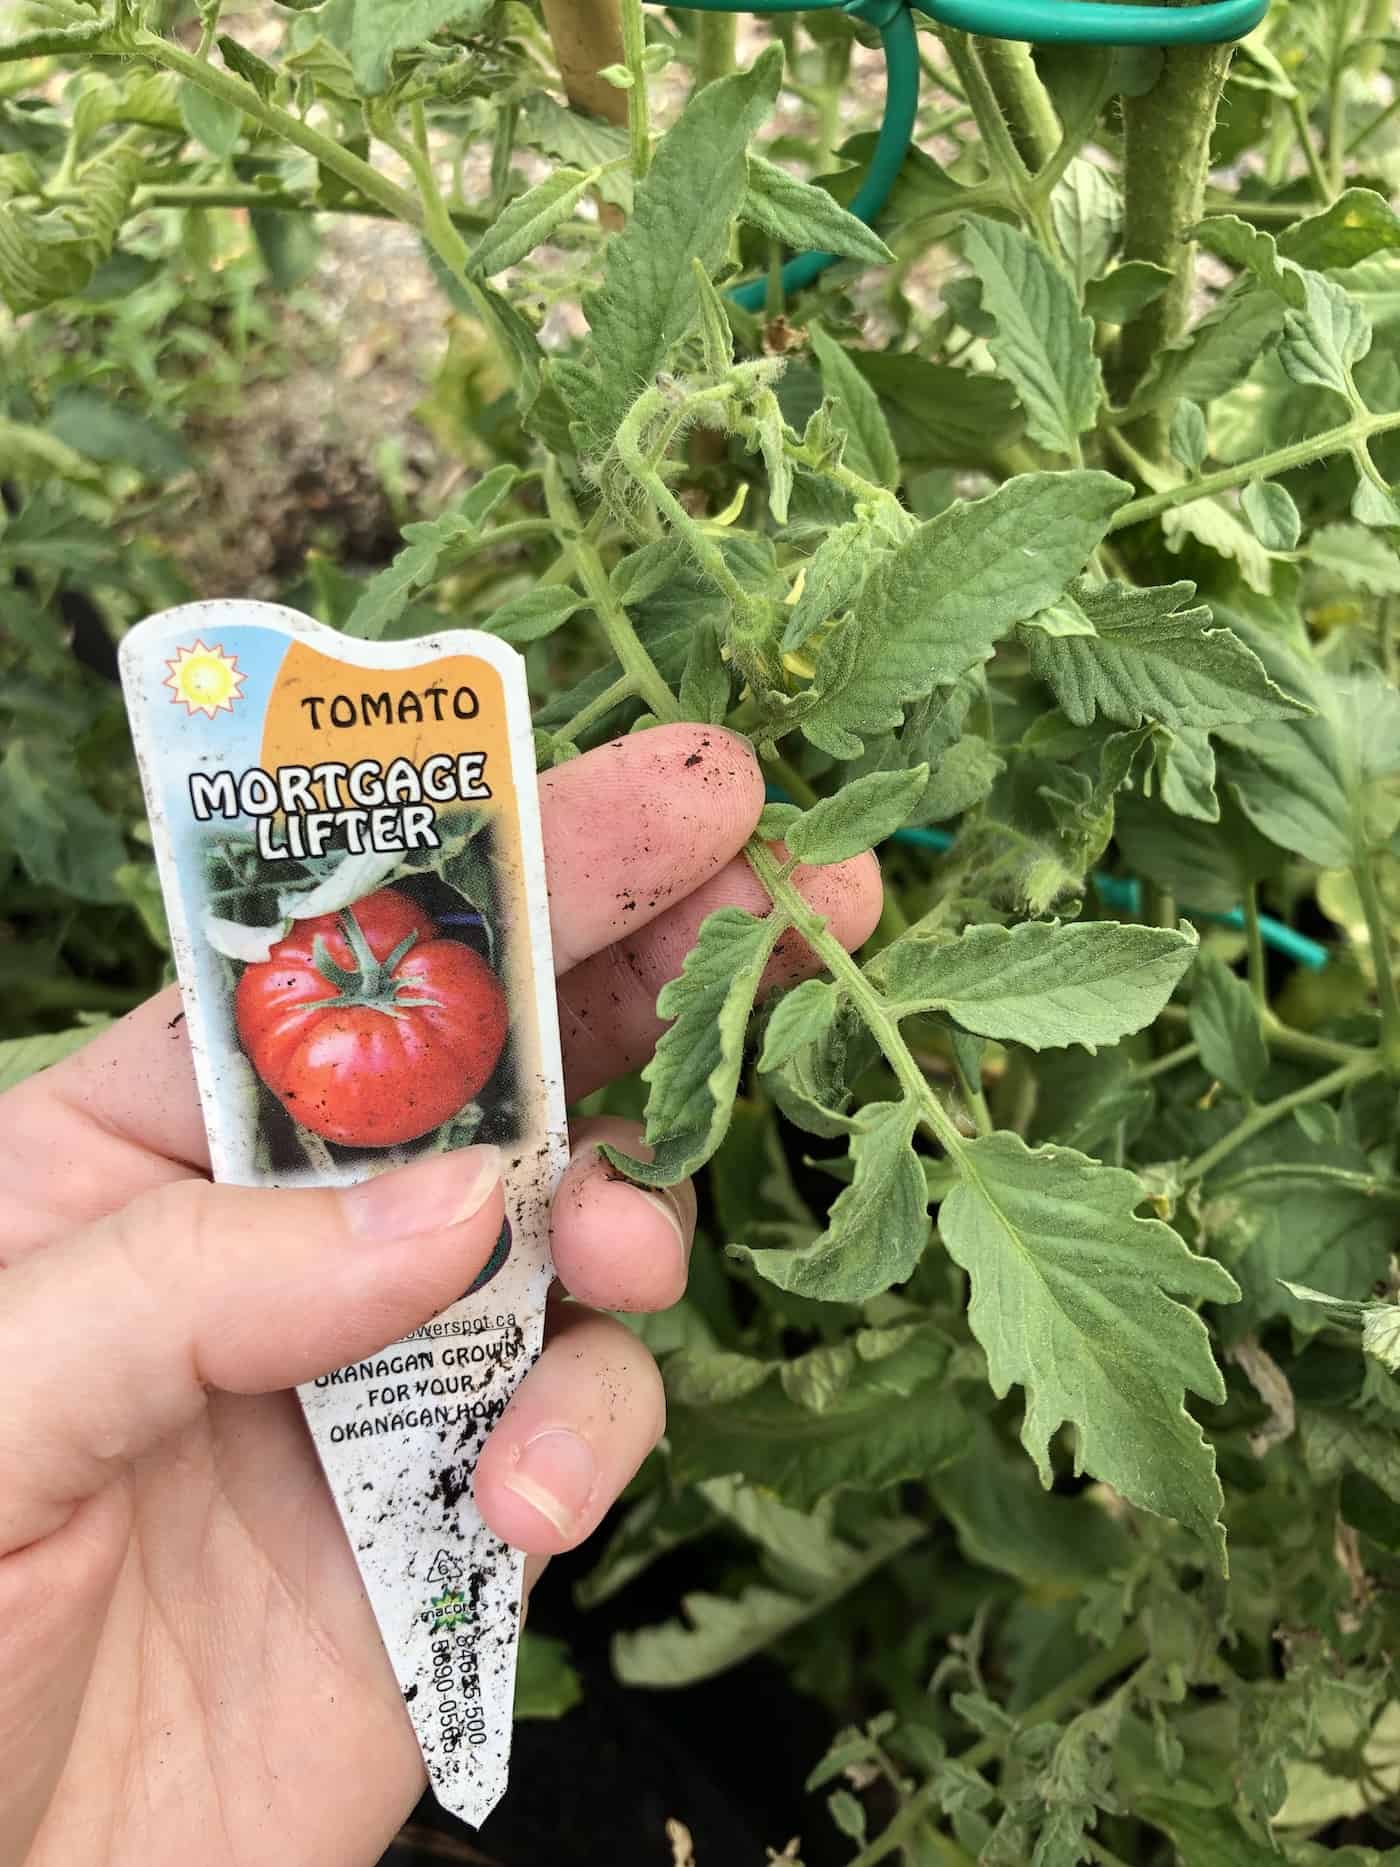 Foliage of mortgage lifter tomato plant